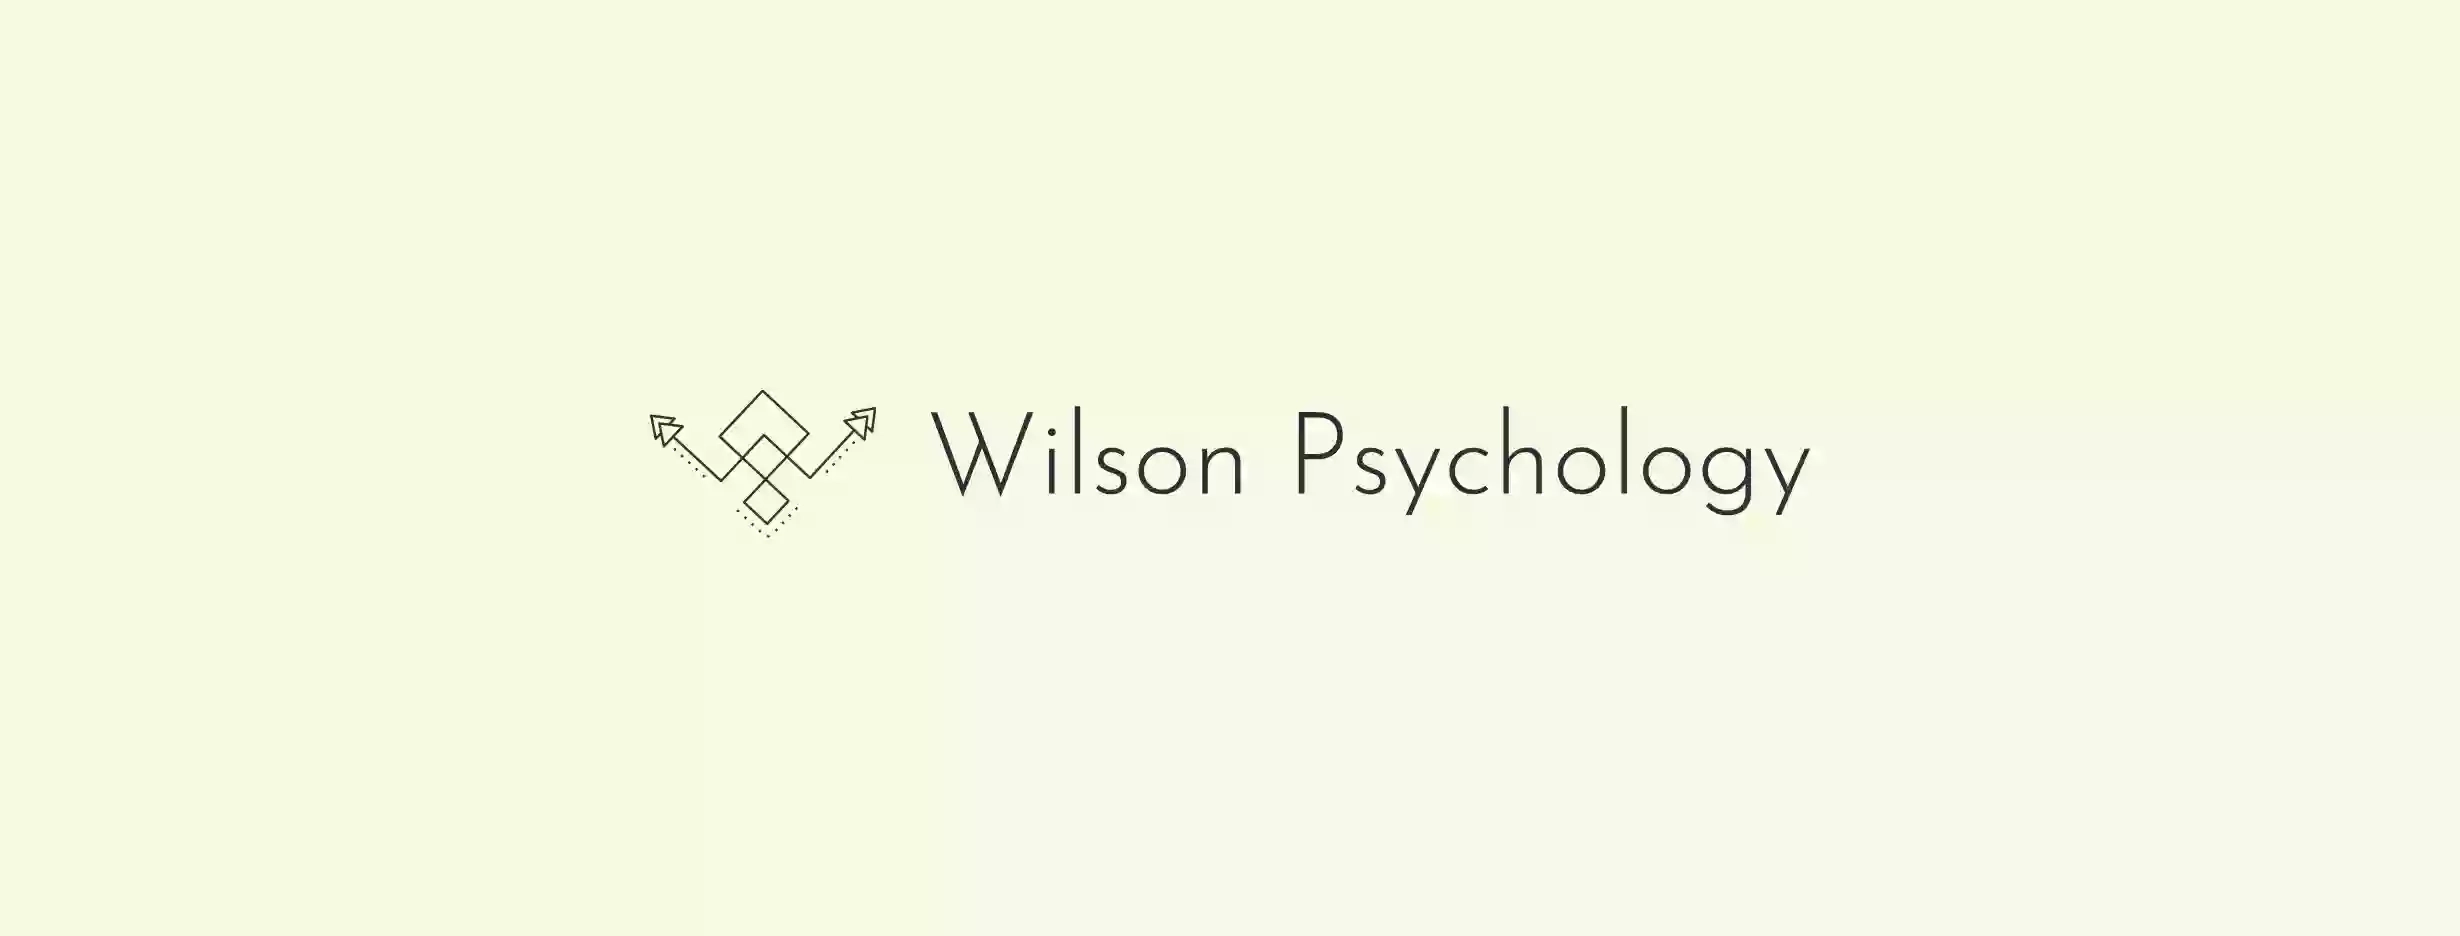 Wilson Psychology Ltd.